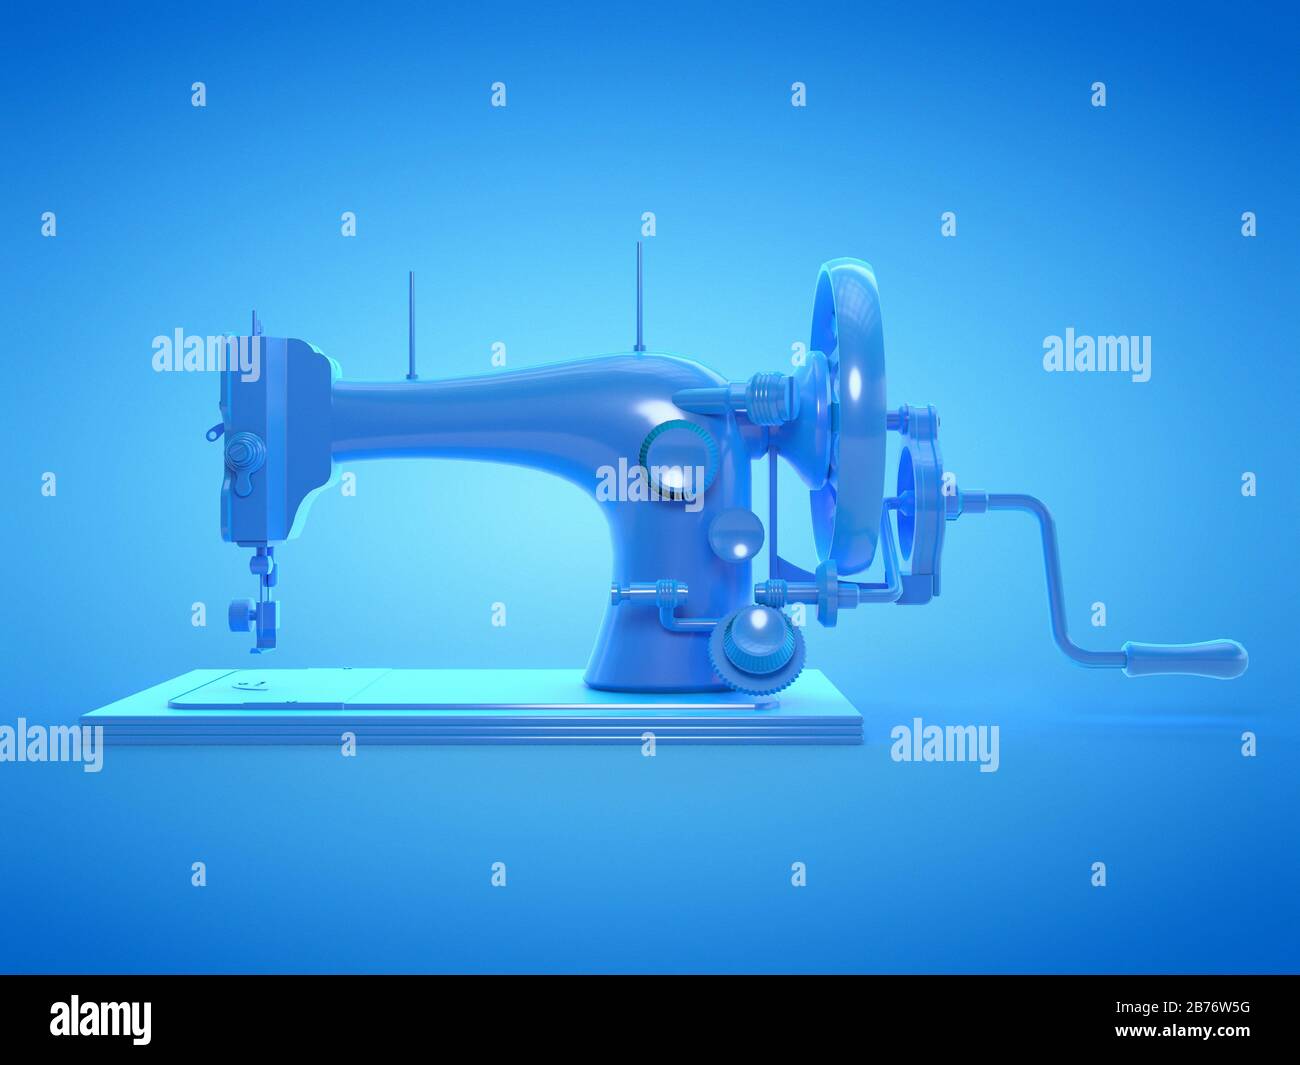 Sewing machine, computer illustration. Stock Photo